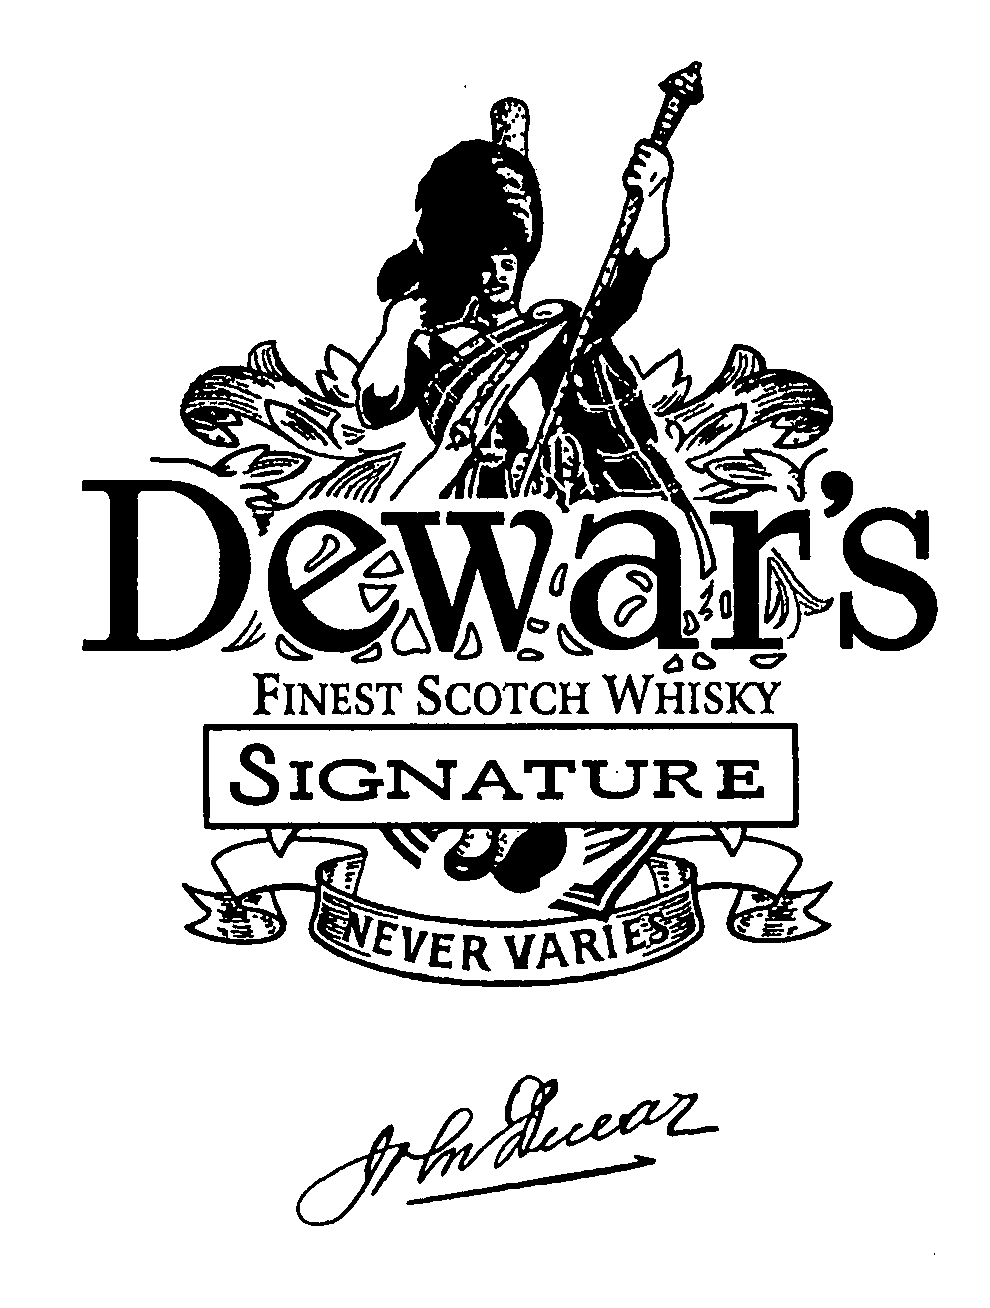  DEWAR'S SIGNATURE FINEST SCOTCH WHISKY NEVER VARIES